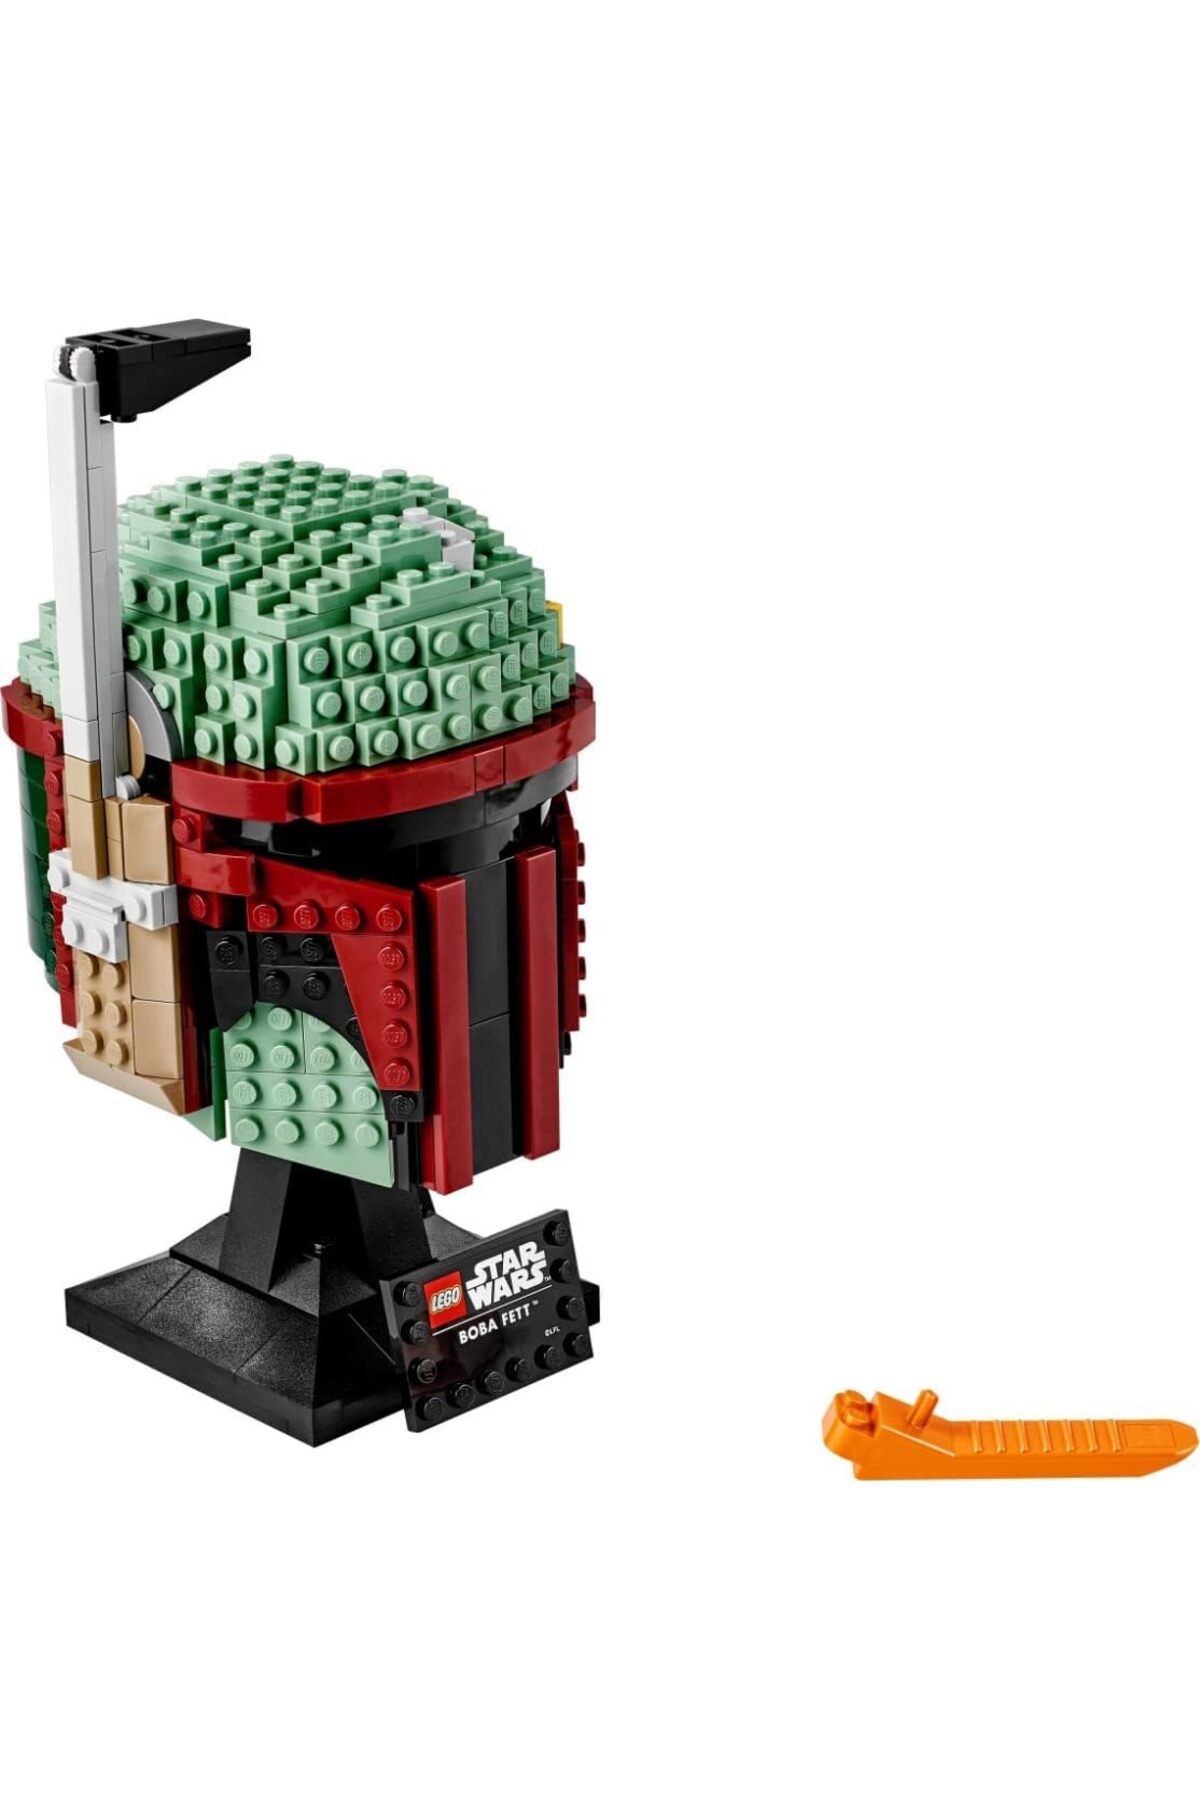 LEGO لگو مود خلاق کلکسیونی 75277 Star Wars Boba Fett Helmet برای بزرگسالانی که عاشق جنگ ستارگان هستند